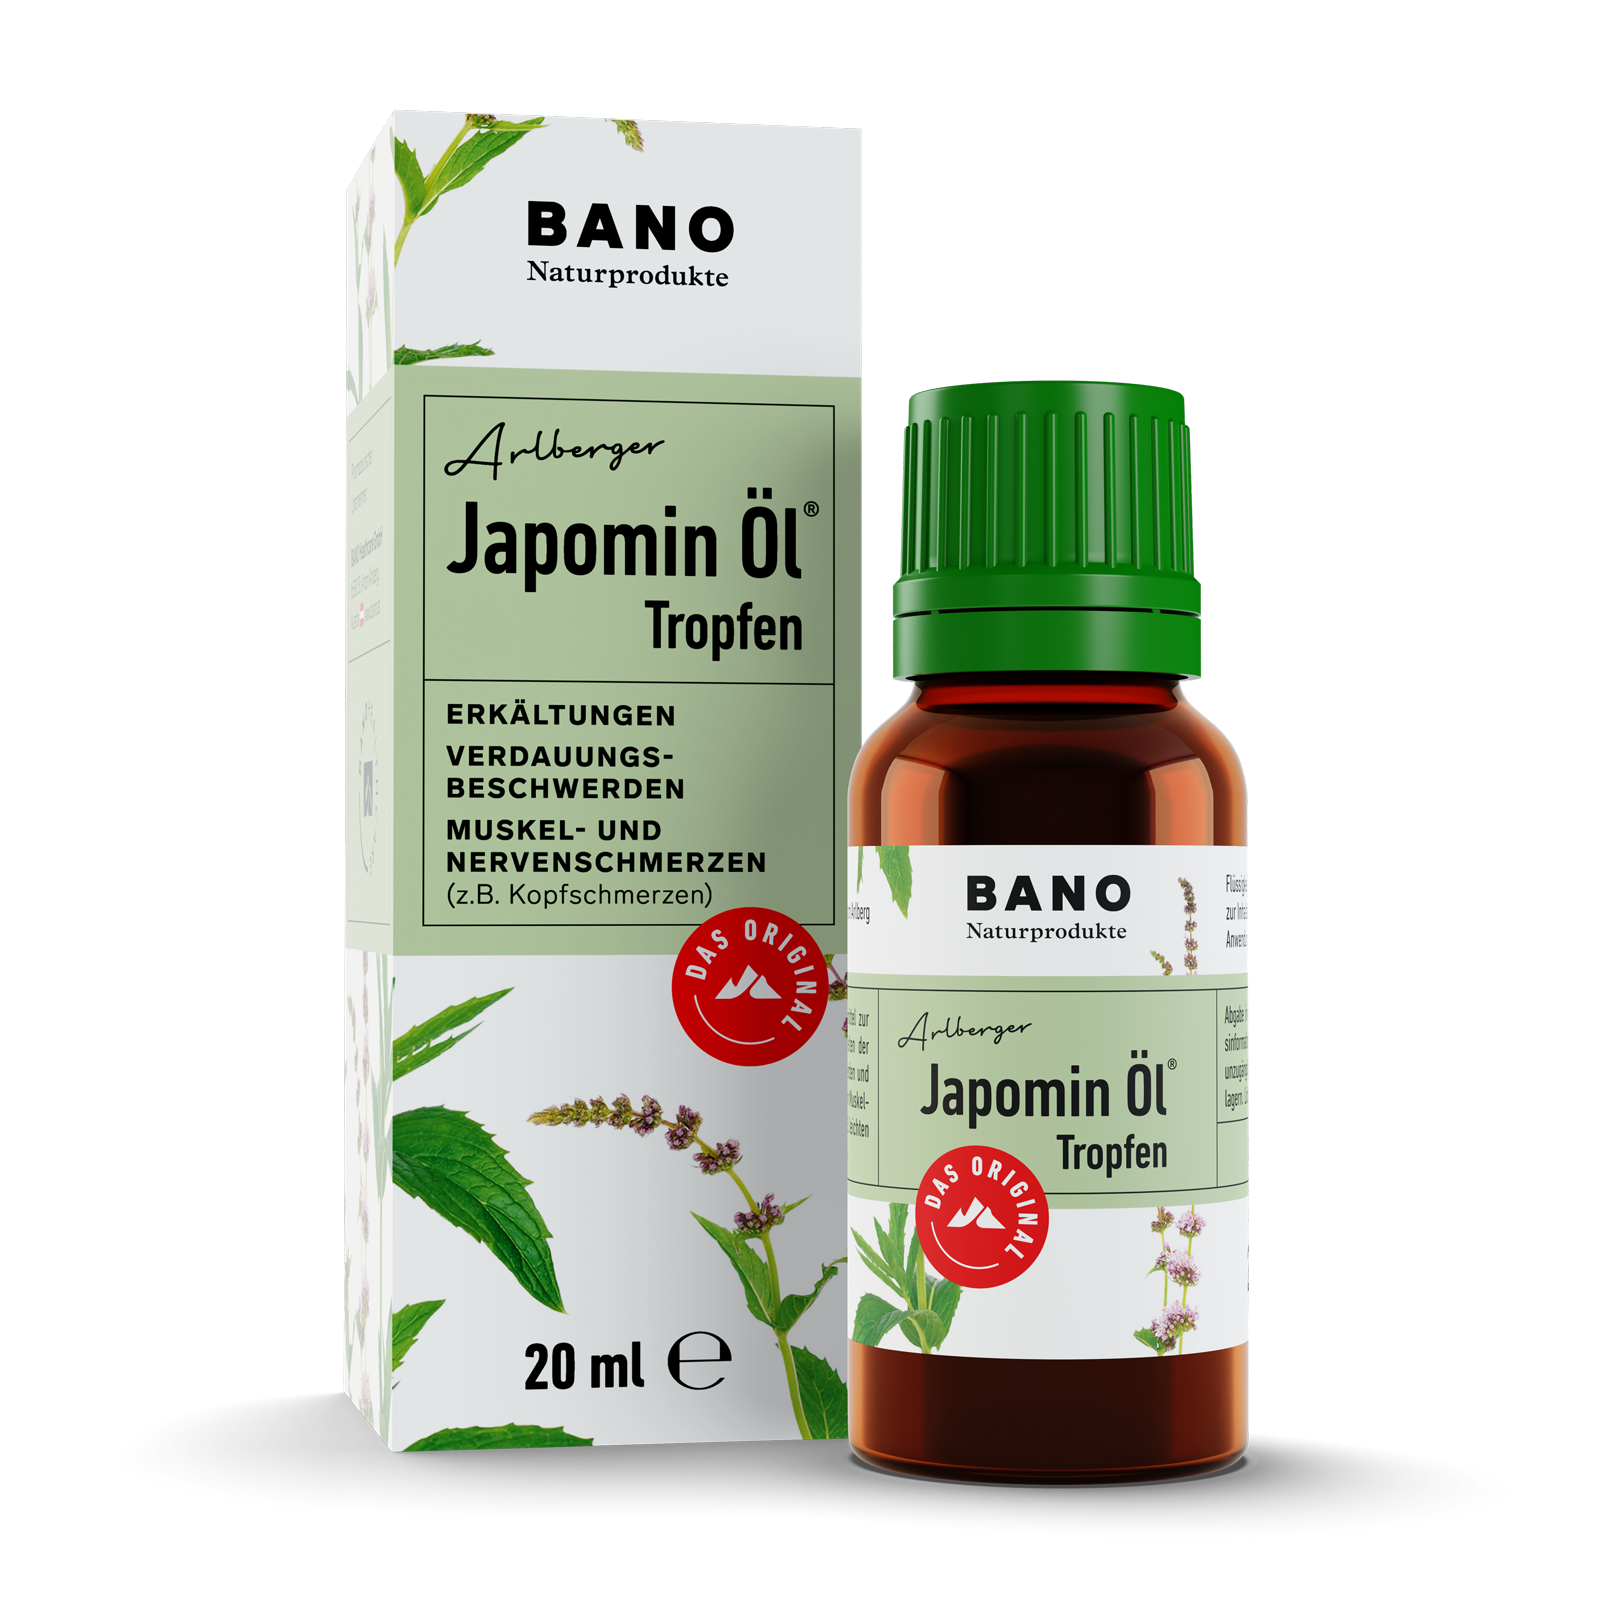 Arlberger Japomin Oil Drops